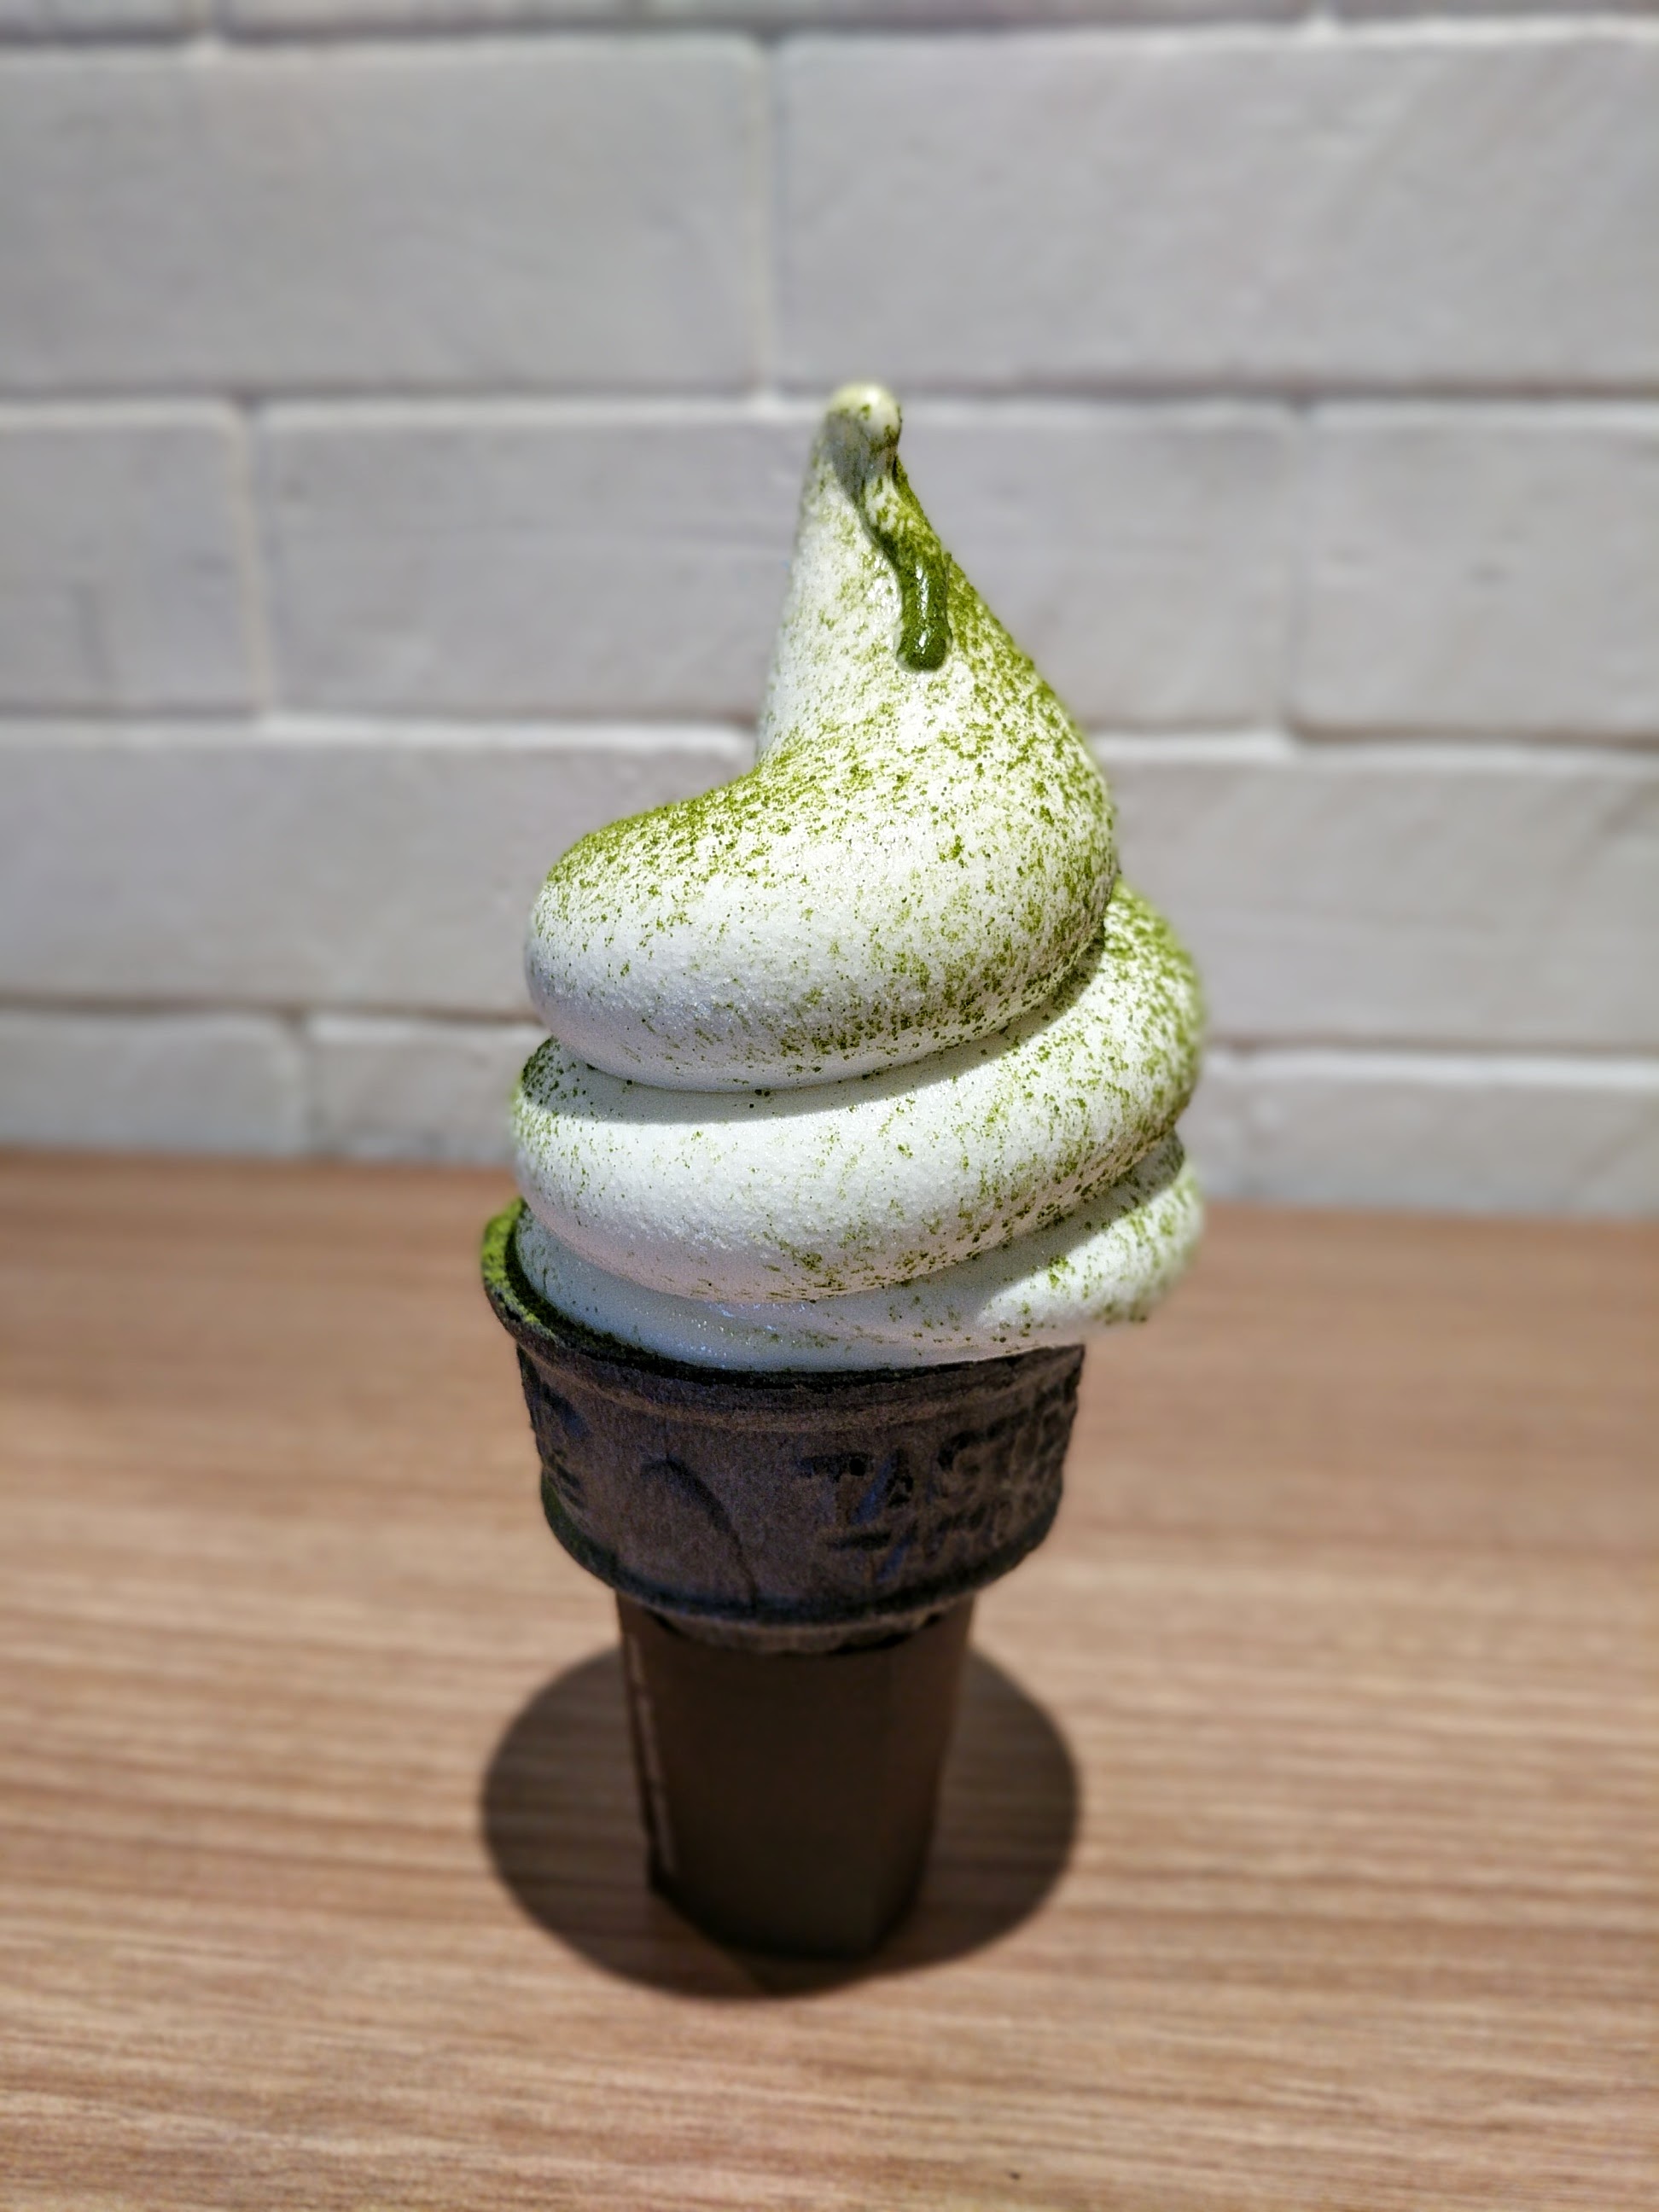 A soft-serve icecream. Taken in Singapore.